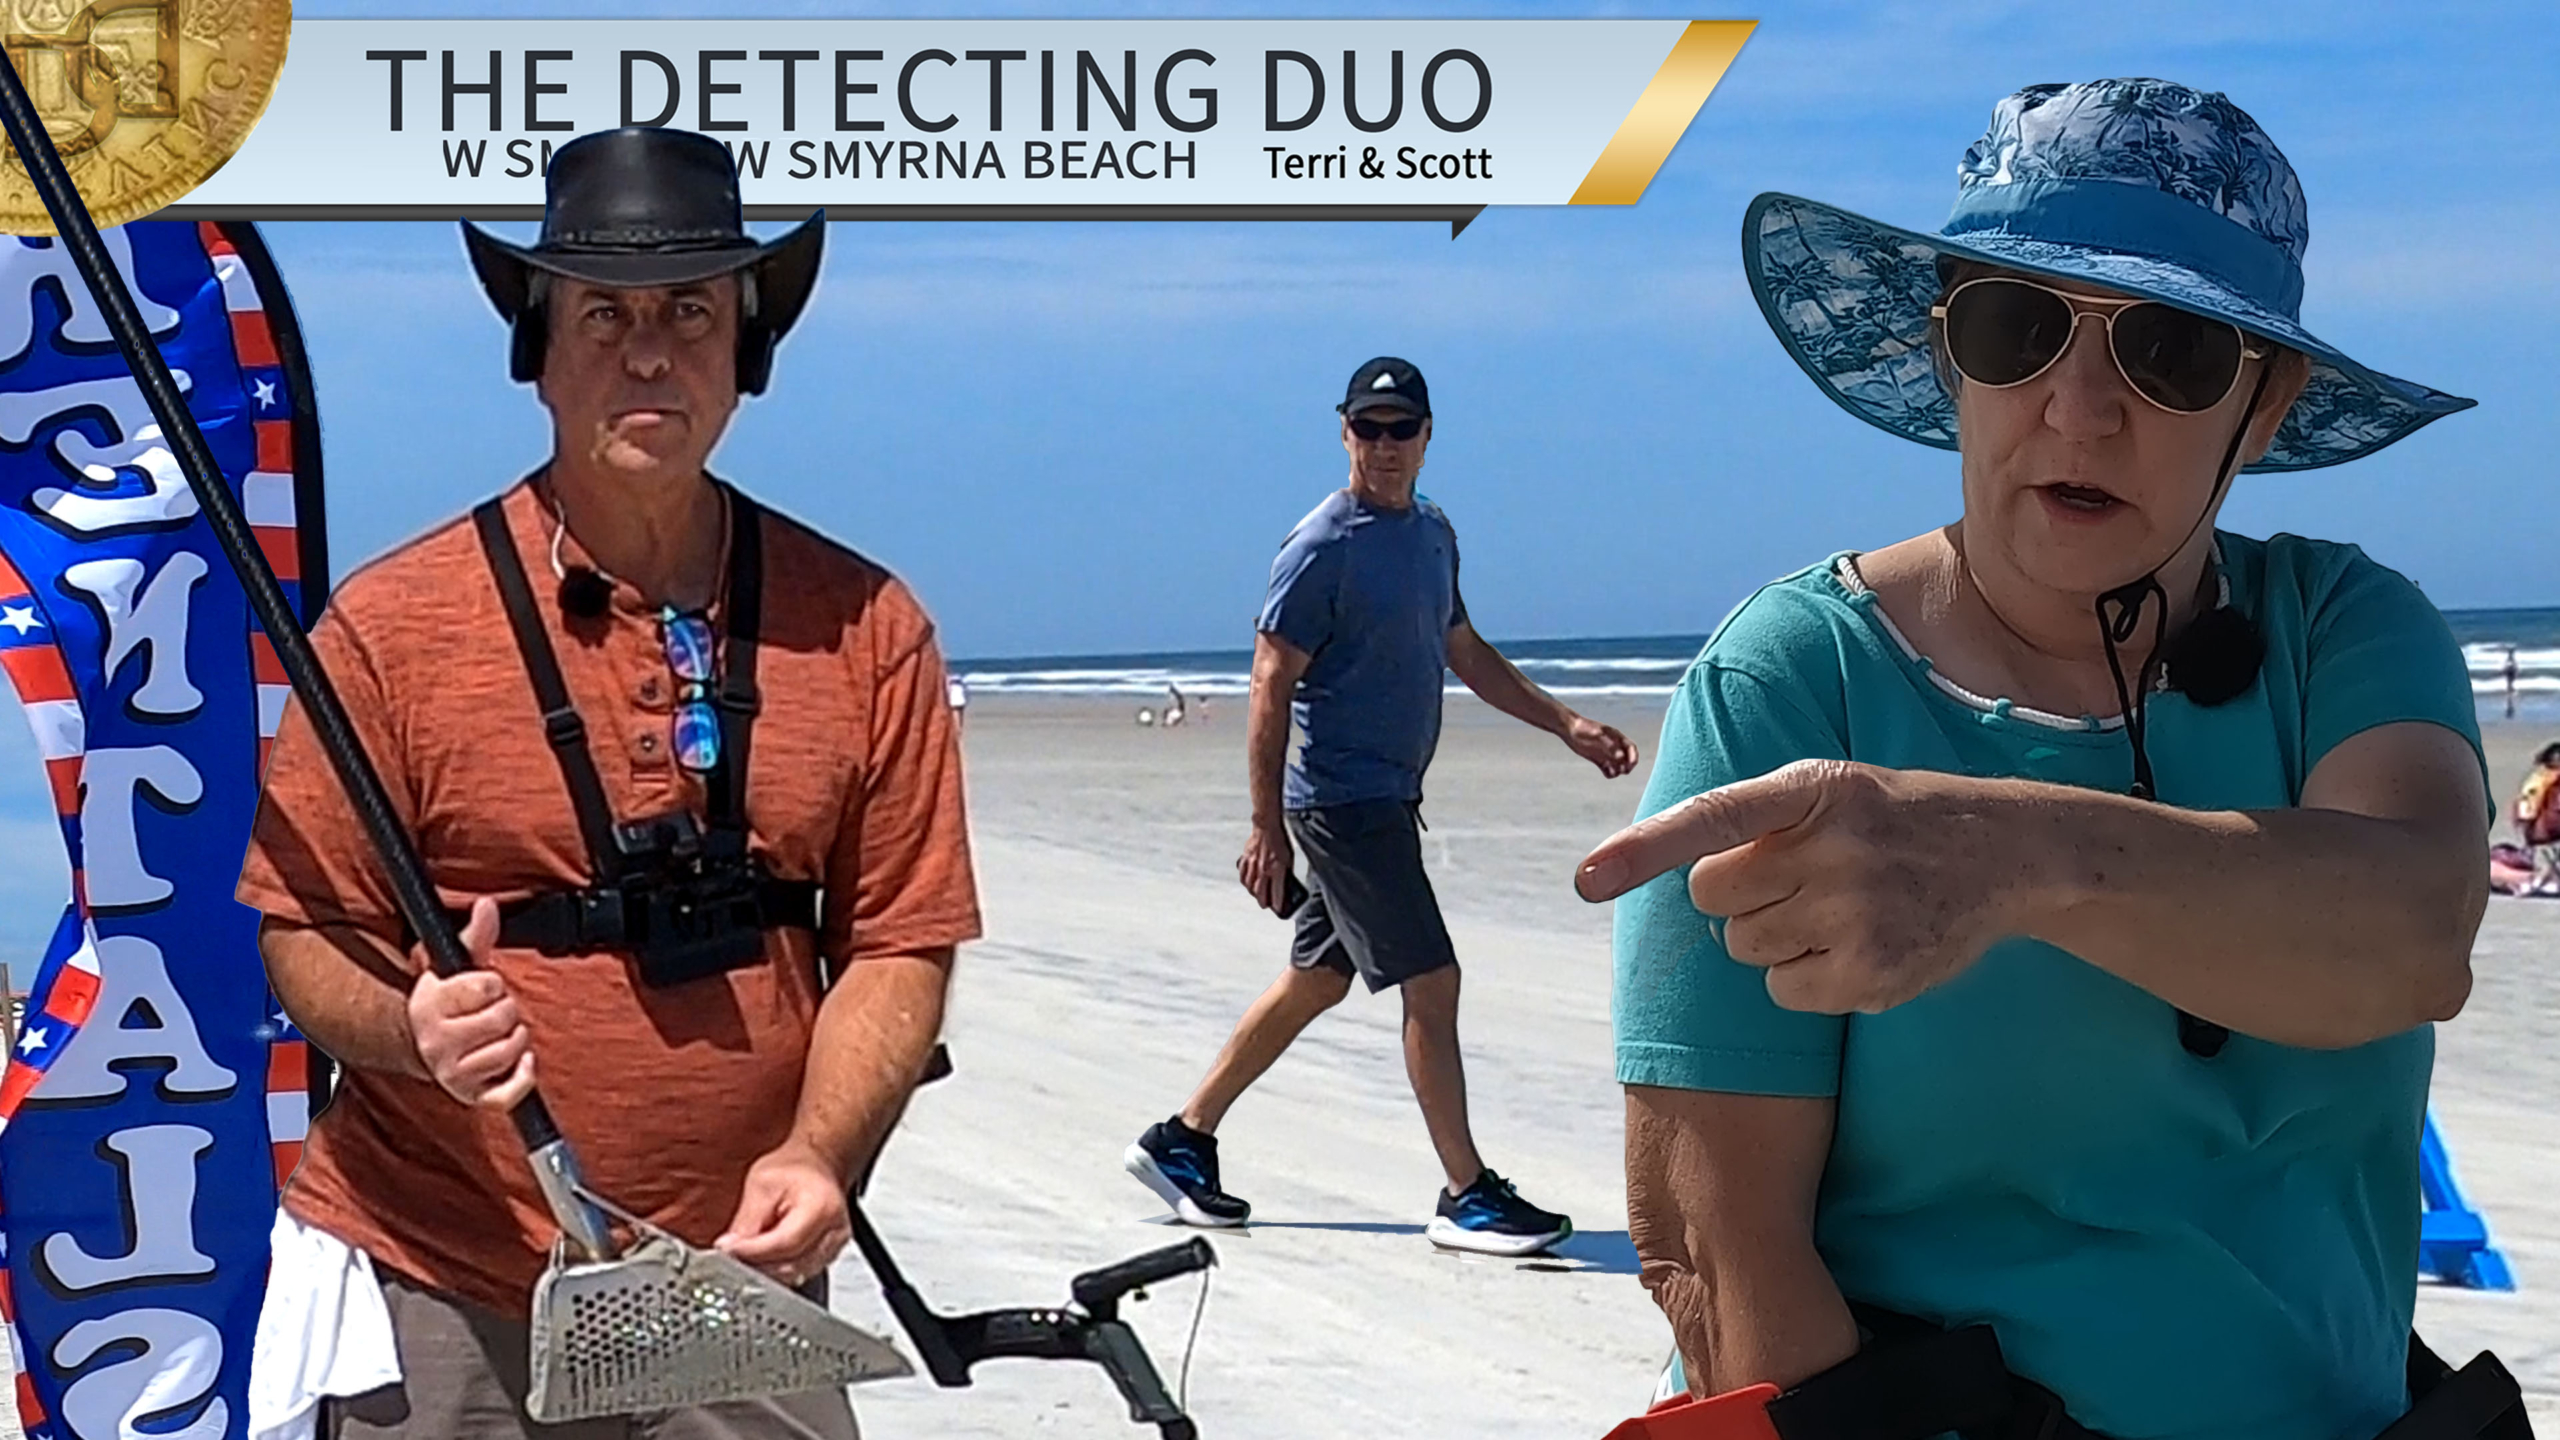 S03 E14 Metal Detecting A Spring Break Day New Smyrna Beach Florida